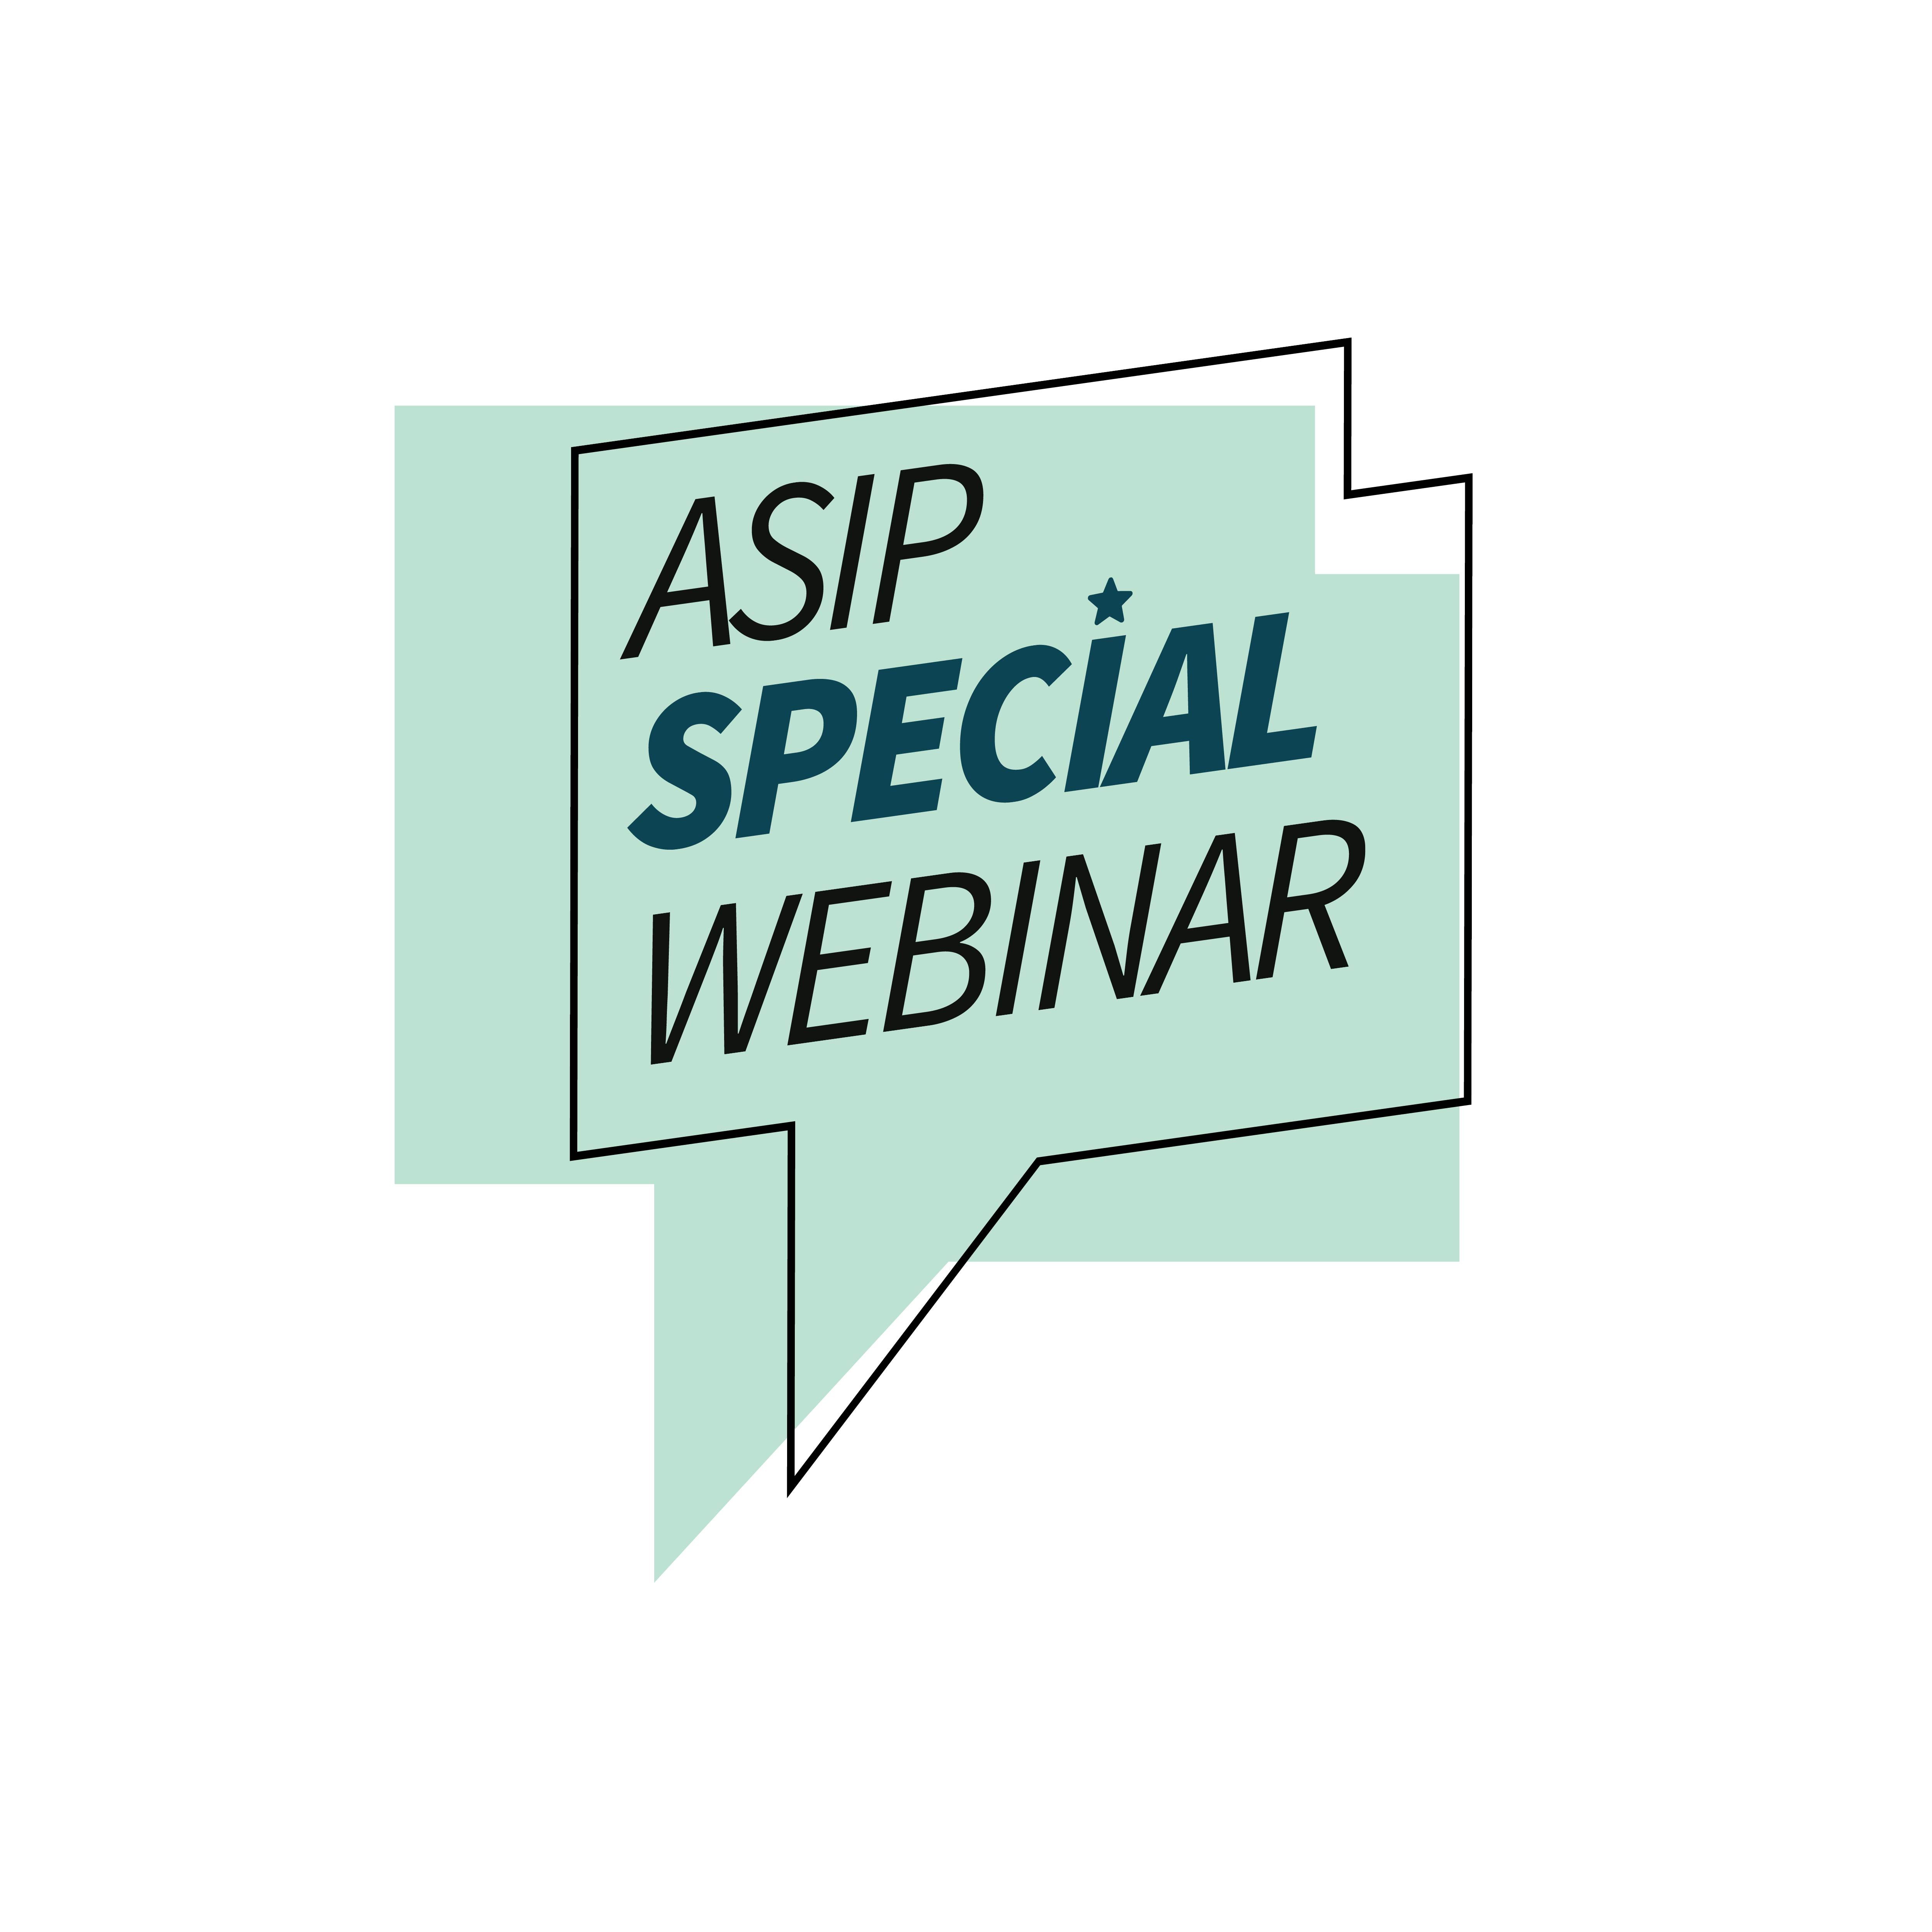 ASIP Special Webinar.png